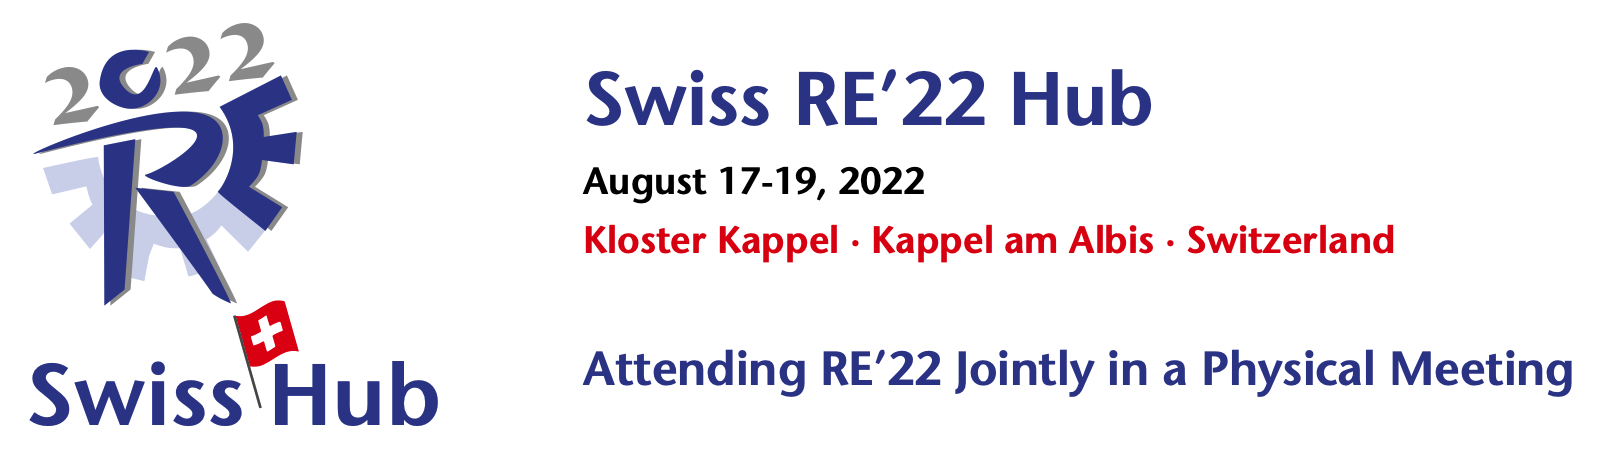 Swiss RE’22 Hub Banner